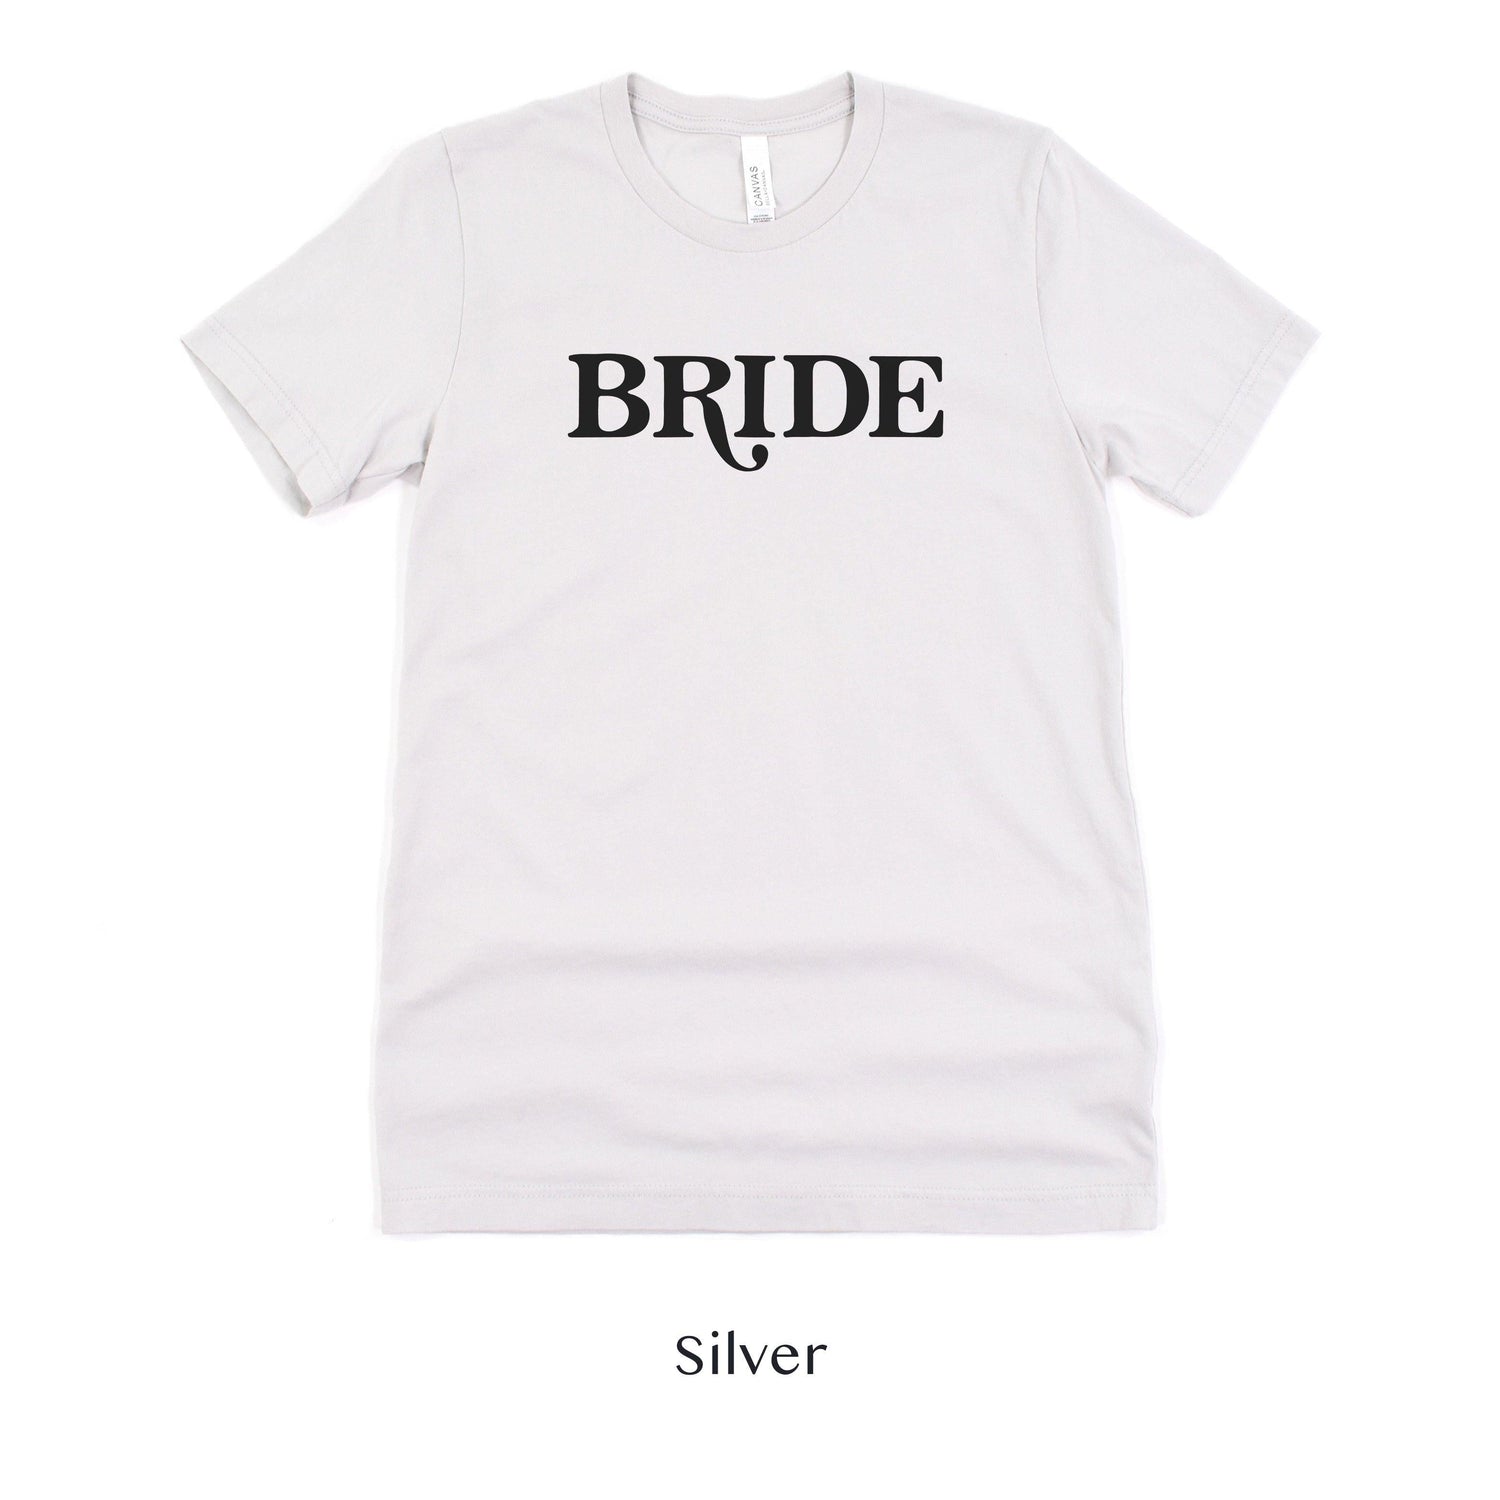 Bride Retro Short-sleeve Tee by Oaklynn Lane - White Shirt